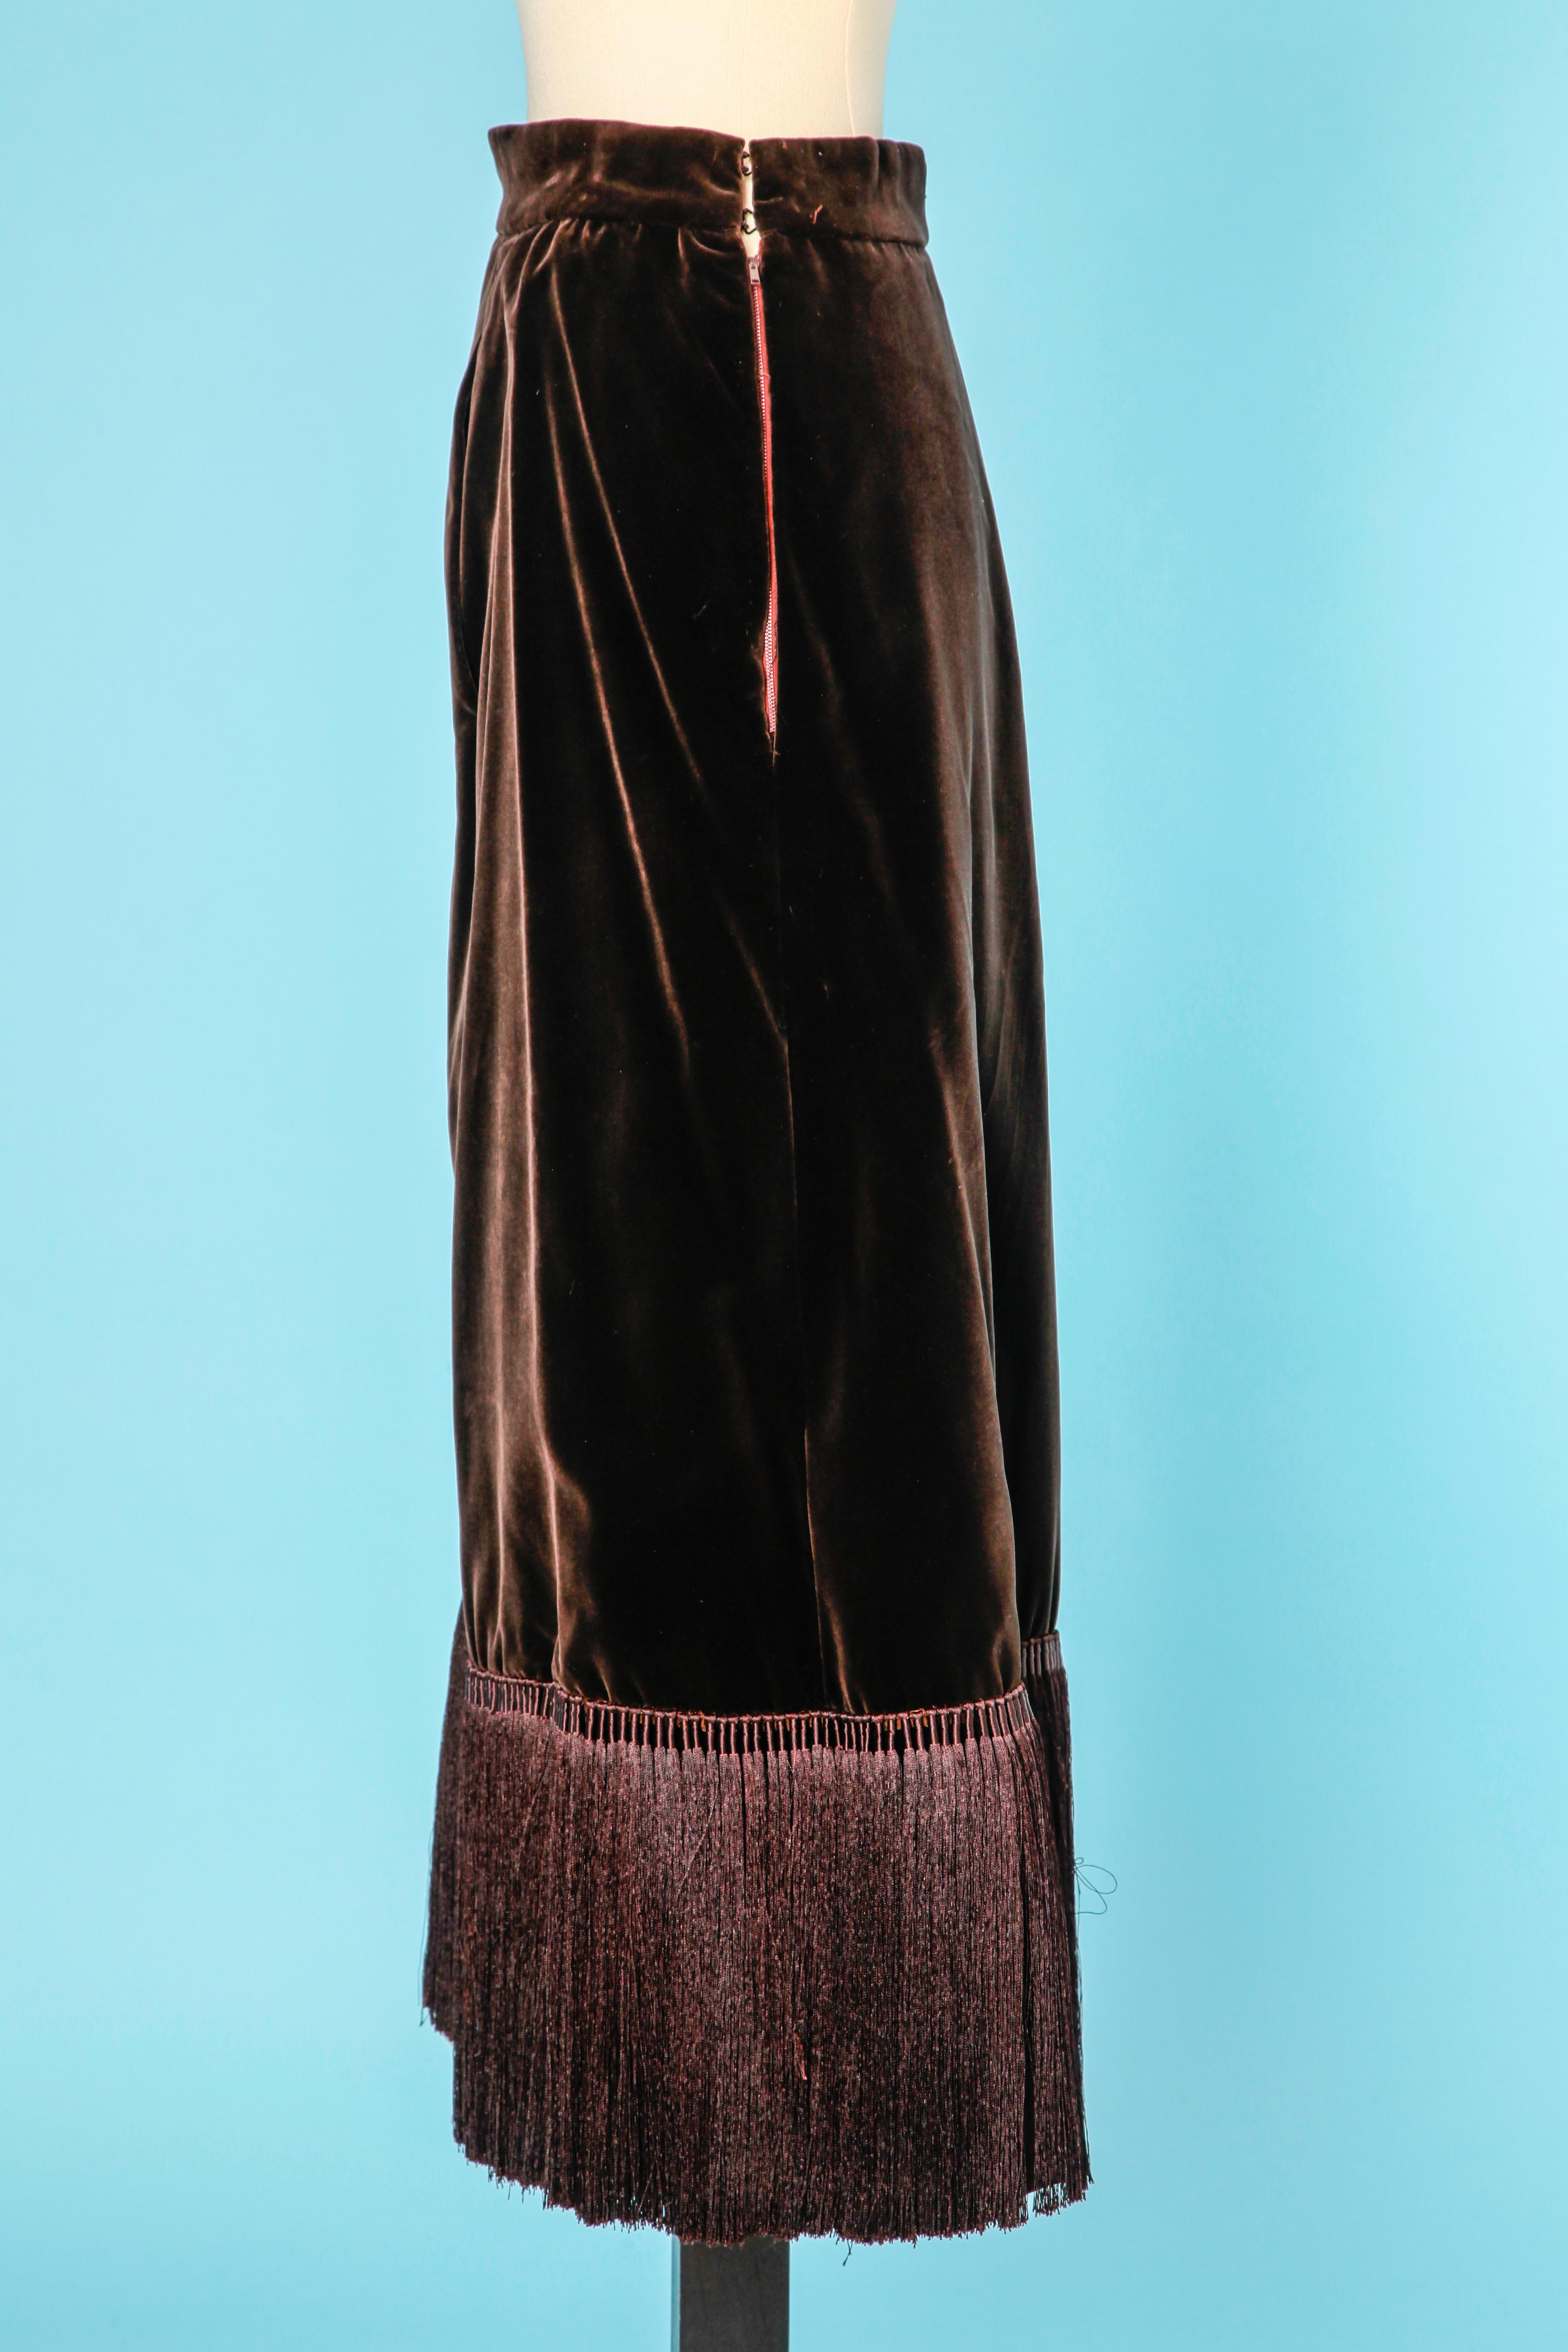 long brown skirt